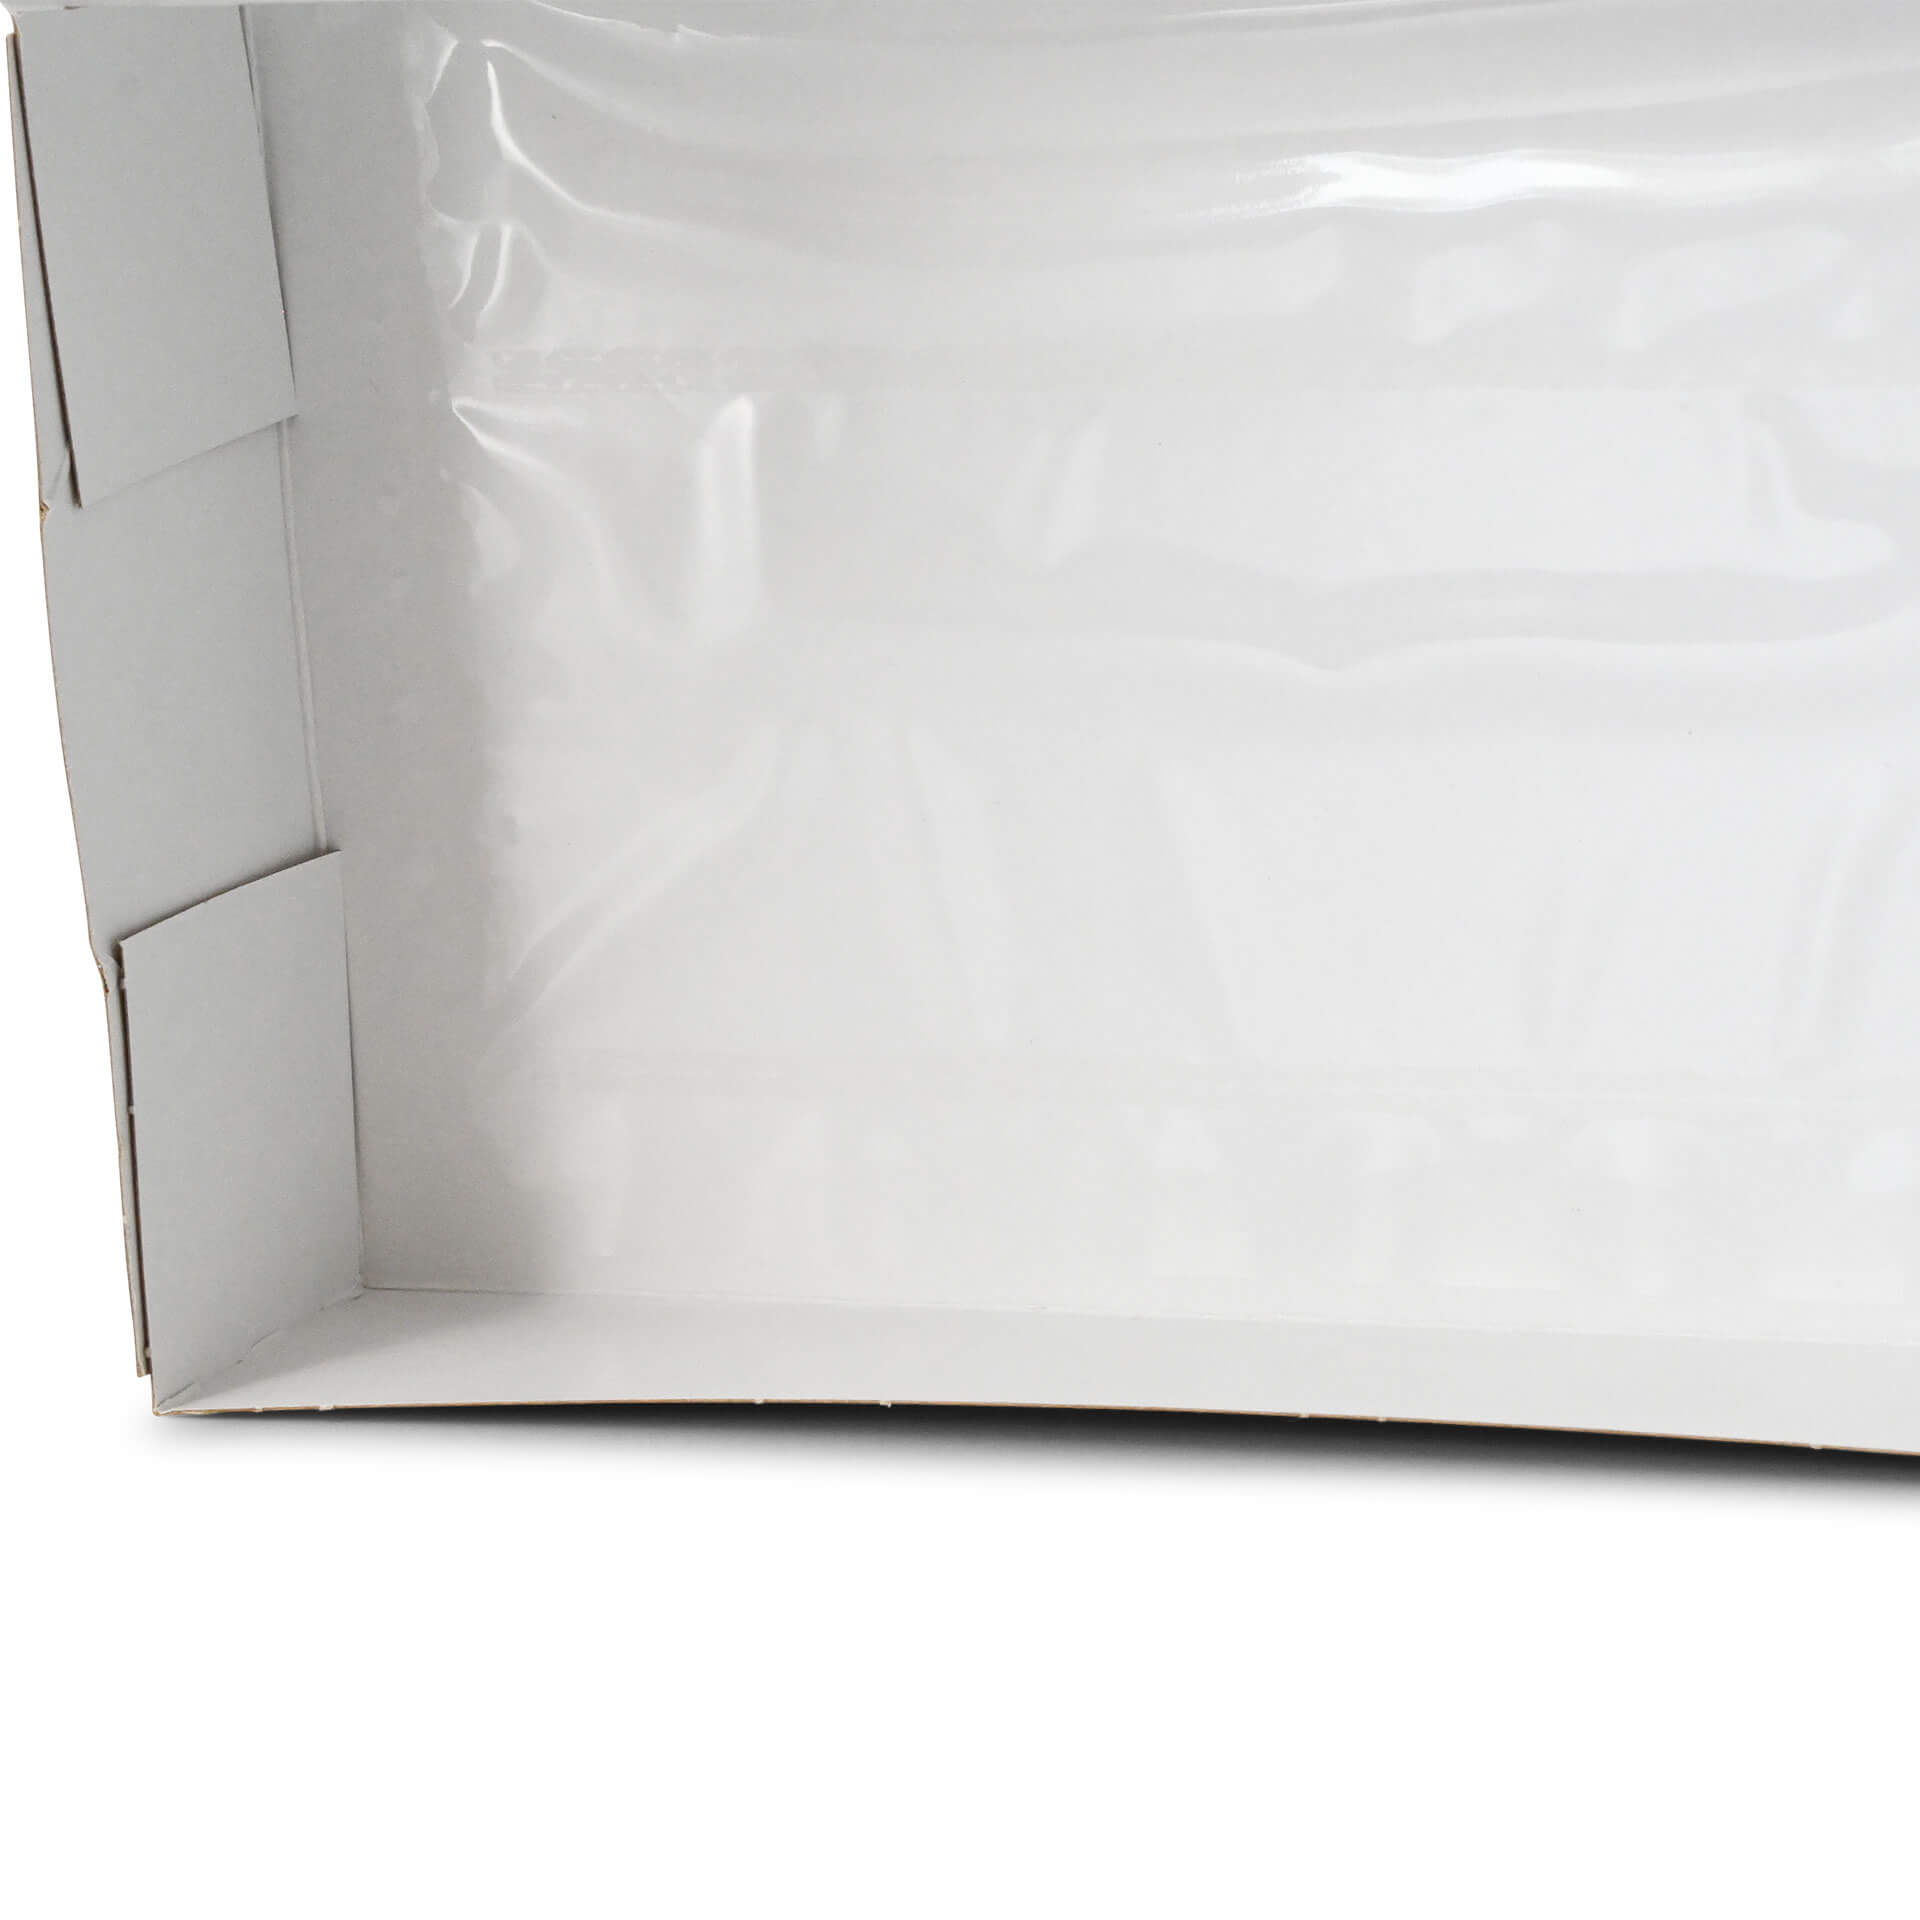 Karton-Sichtfenster-Schachteln 20 x 12 x 4  cm, 900 ml, PLA-Folie, braun, faltbar